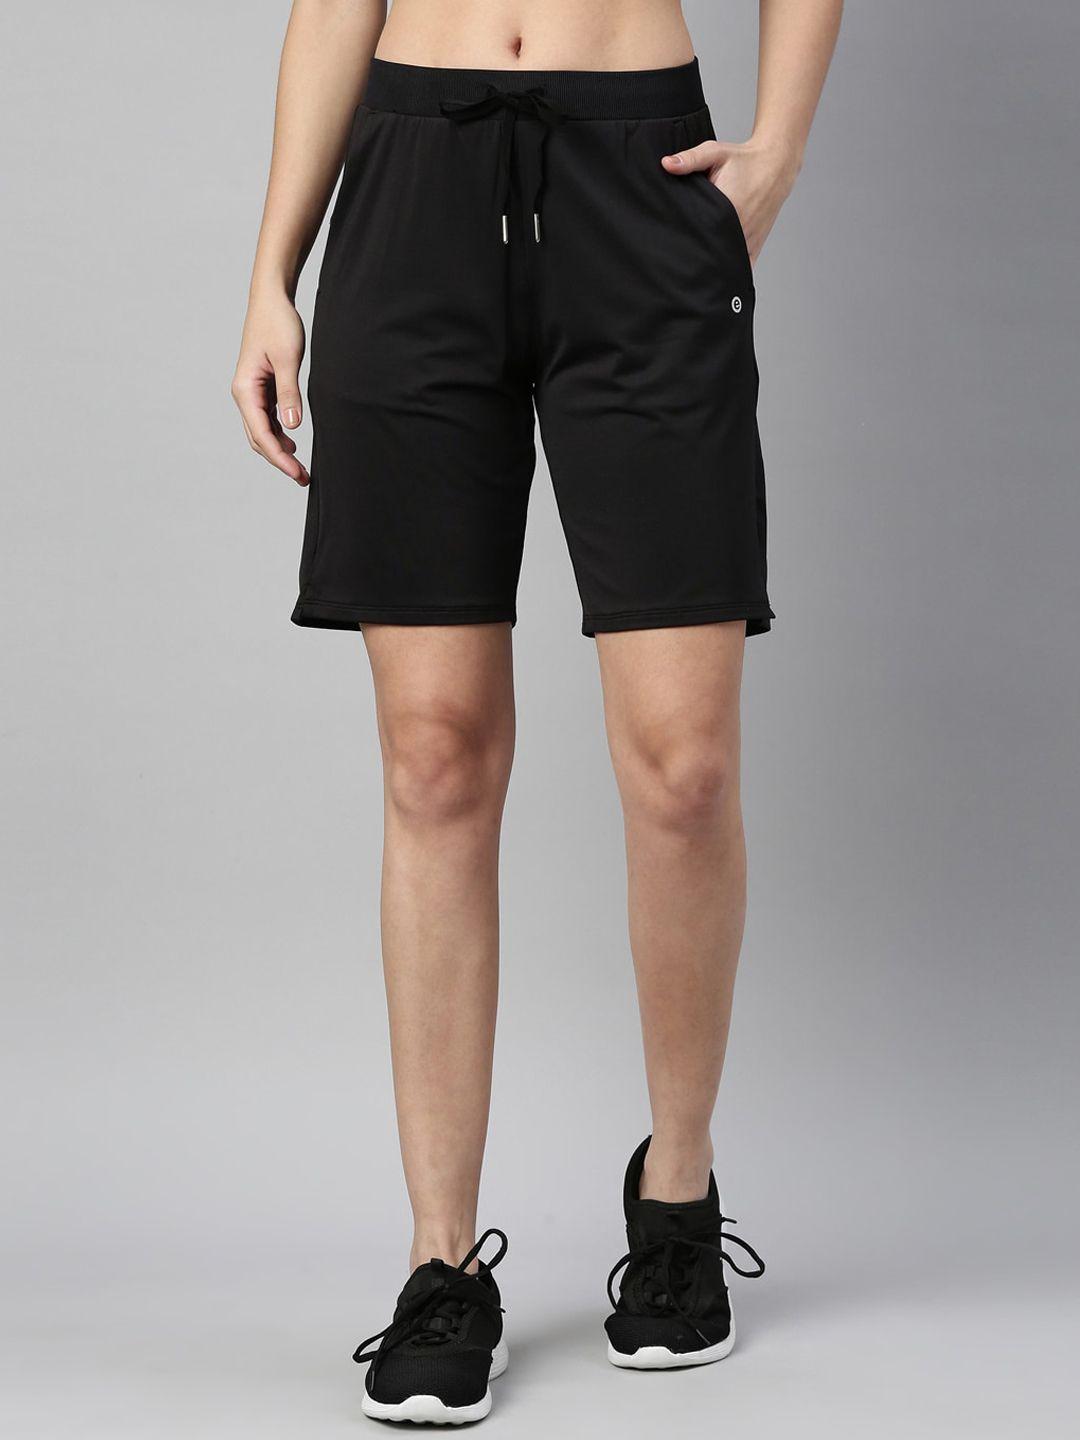 enamor-women-black-loose-fit-outdoor-sports-shorts